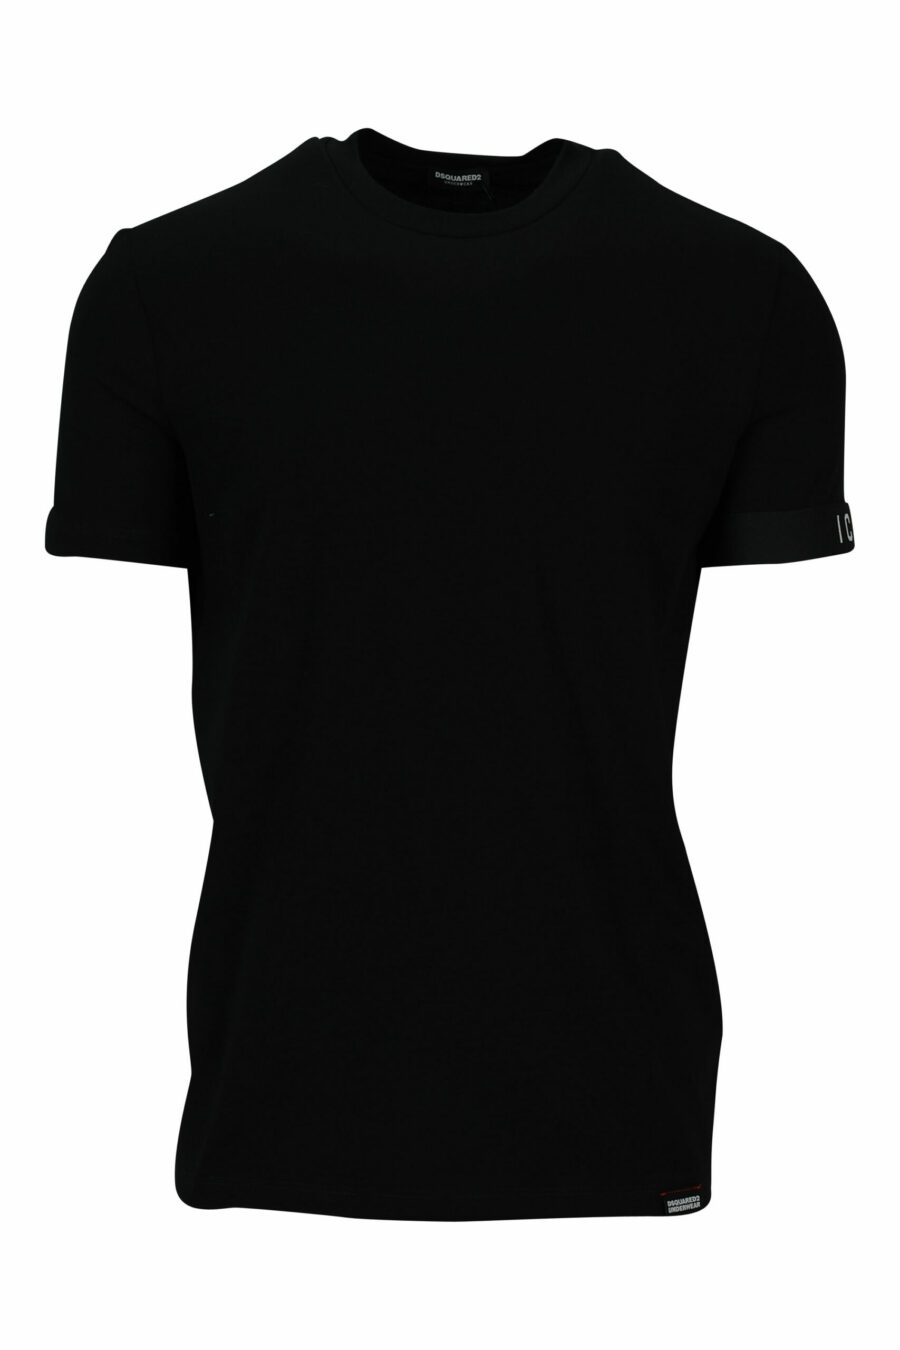 Tee-shirt noir avec petit logo - 8032674767431